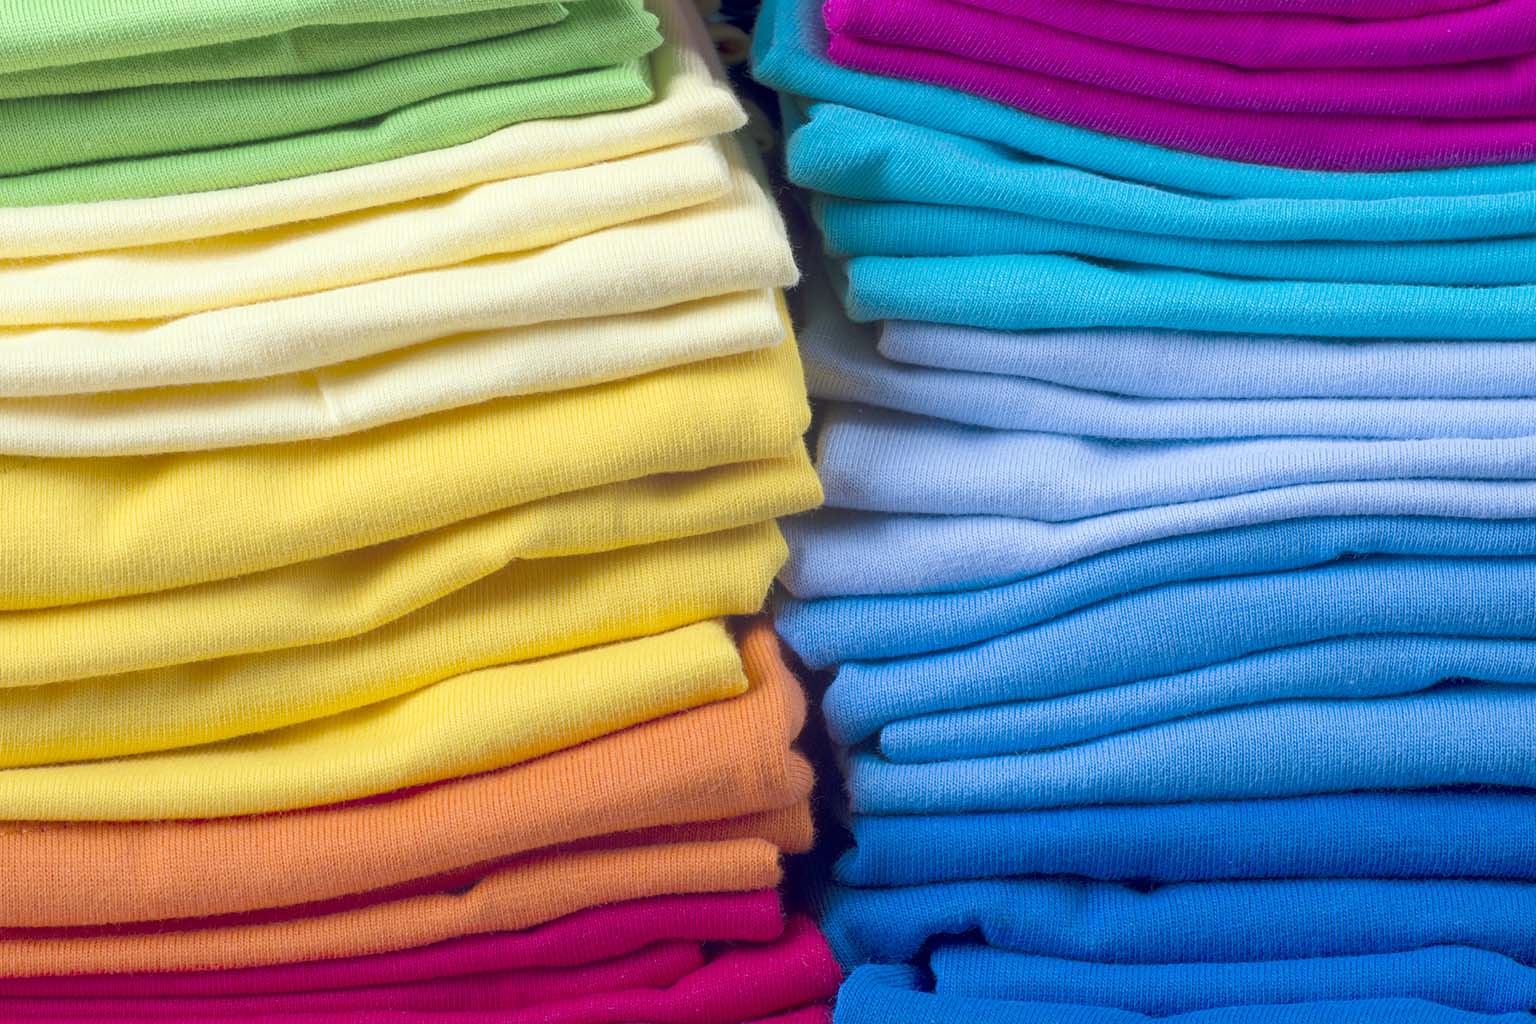 bulk t shirts order, order t shirts in bulk, ordering shirts in bulk, wholesale shirts in bulk, cheap wholesale t shirts